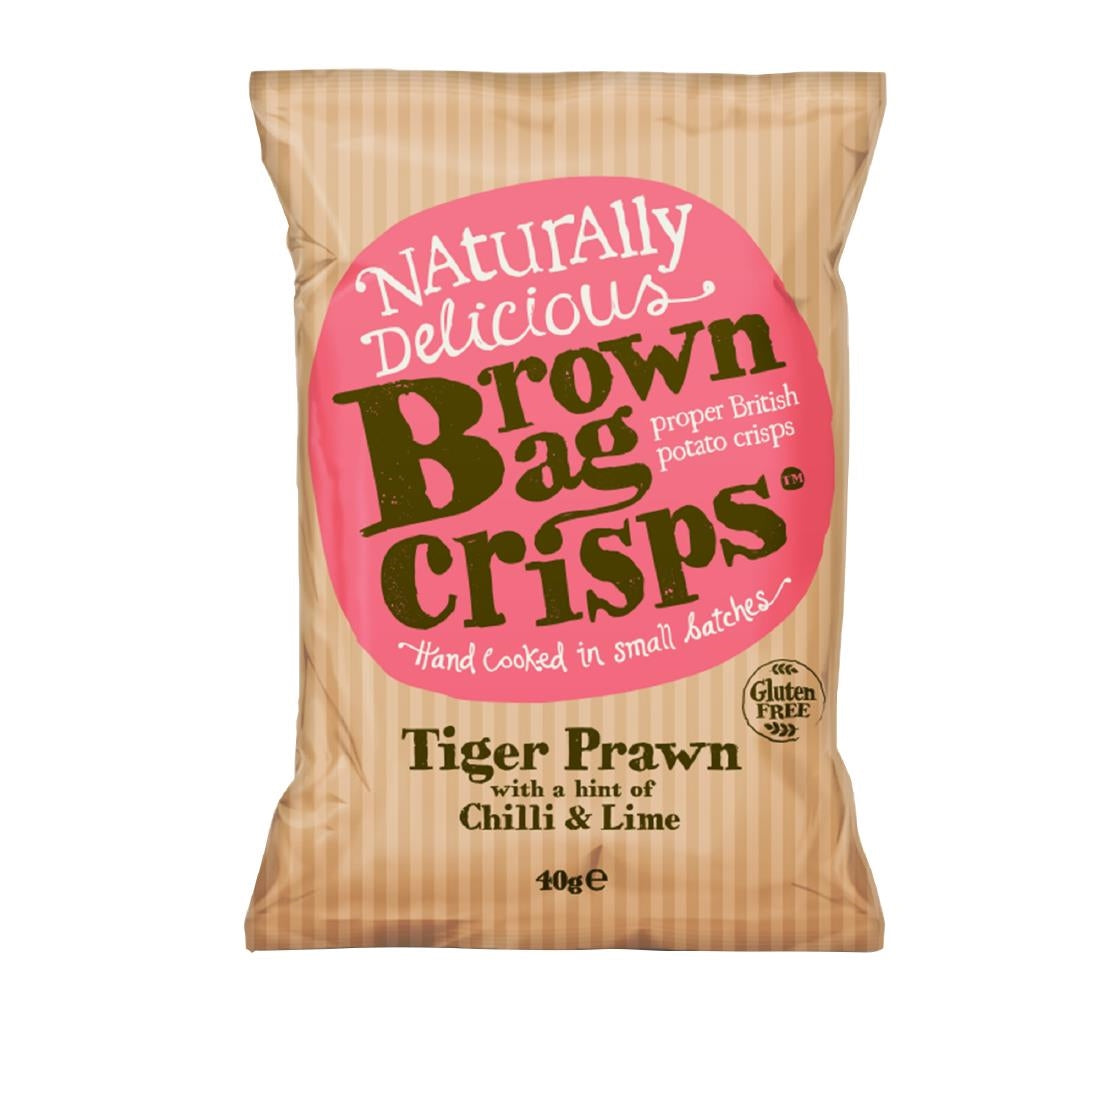 FU434 Brown Bag Crisps Tiger Prawn Chilli and Lime 40g (Pack of 20)